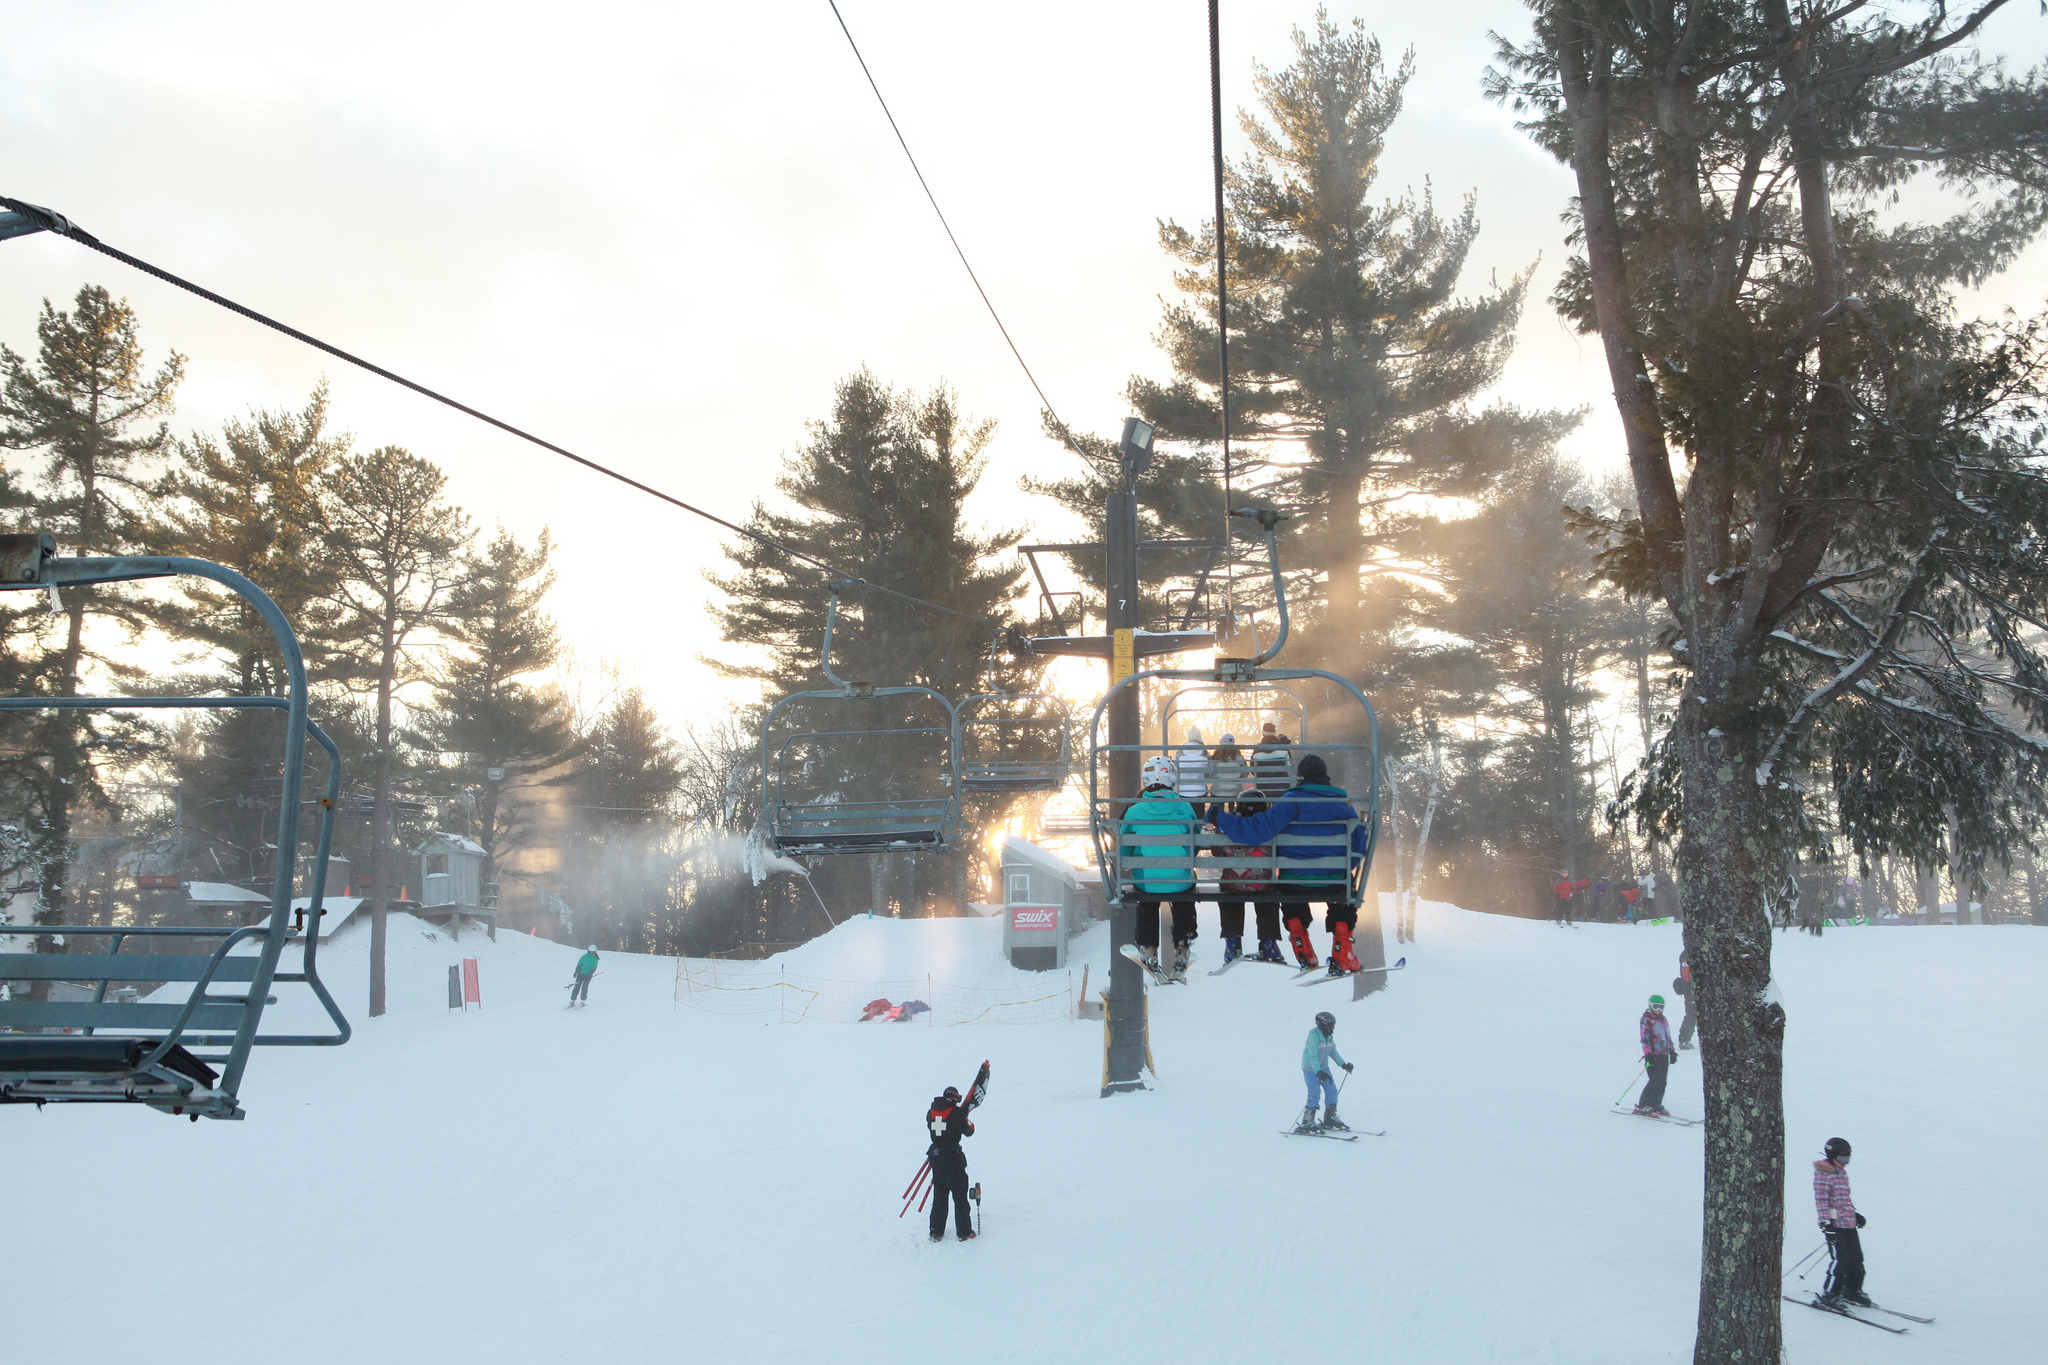 A family ski area in Massachusetts.